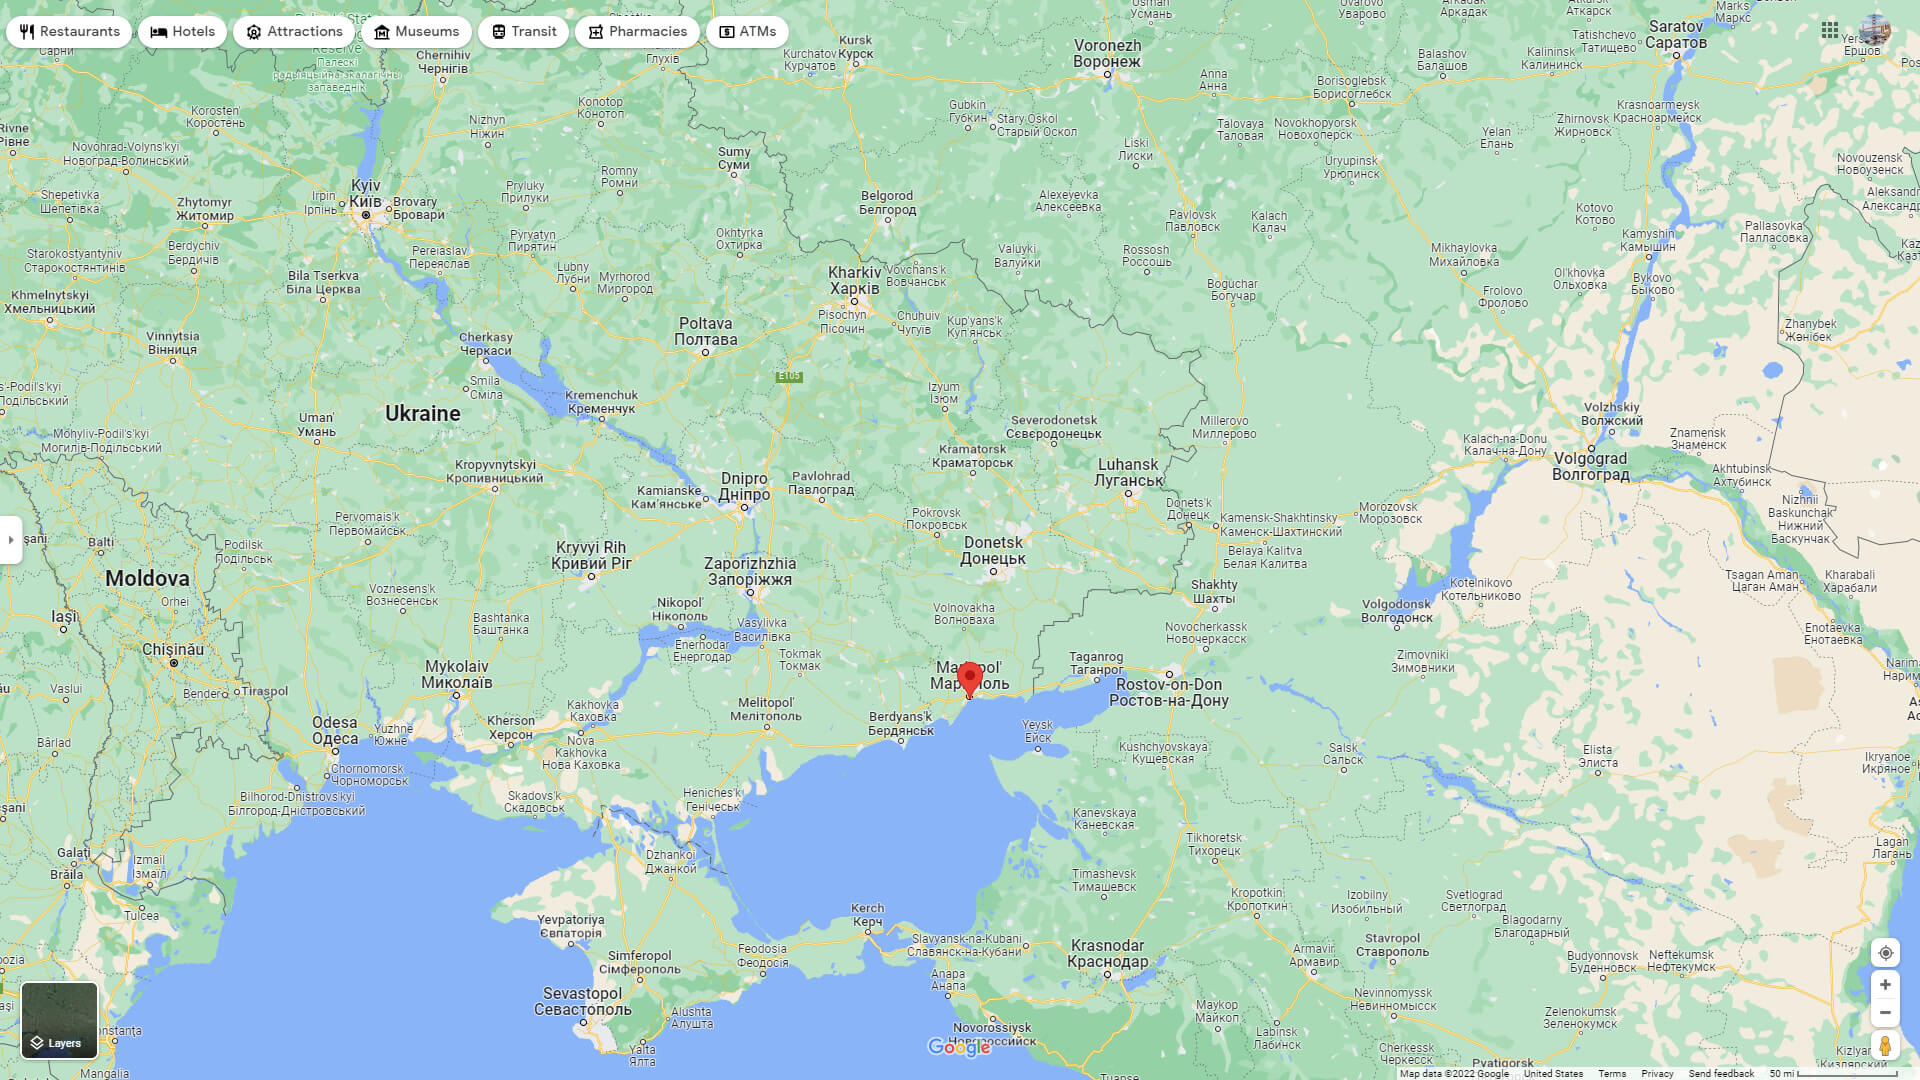 Where is Mariupol in Ukraine